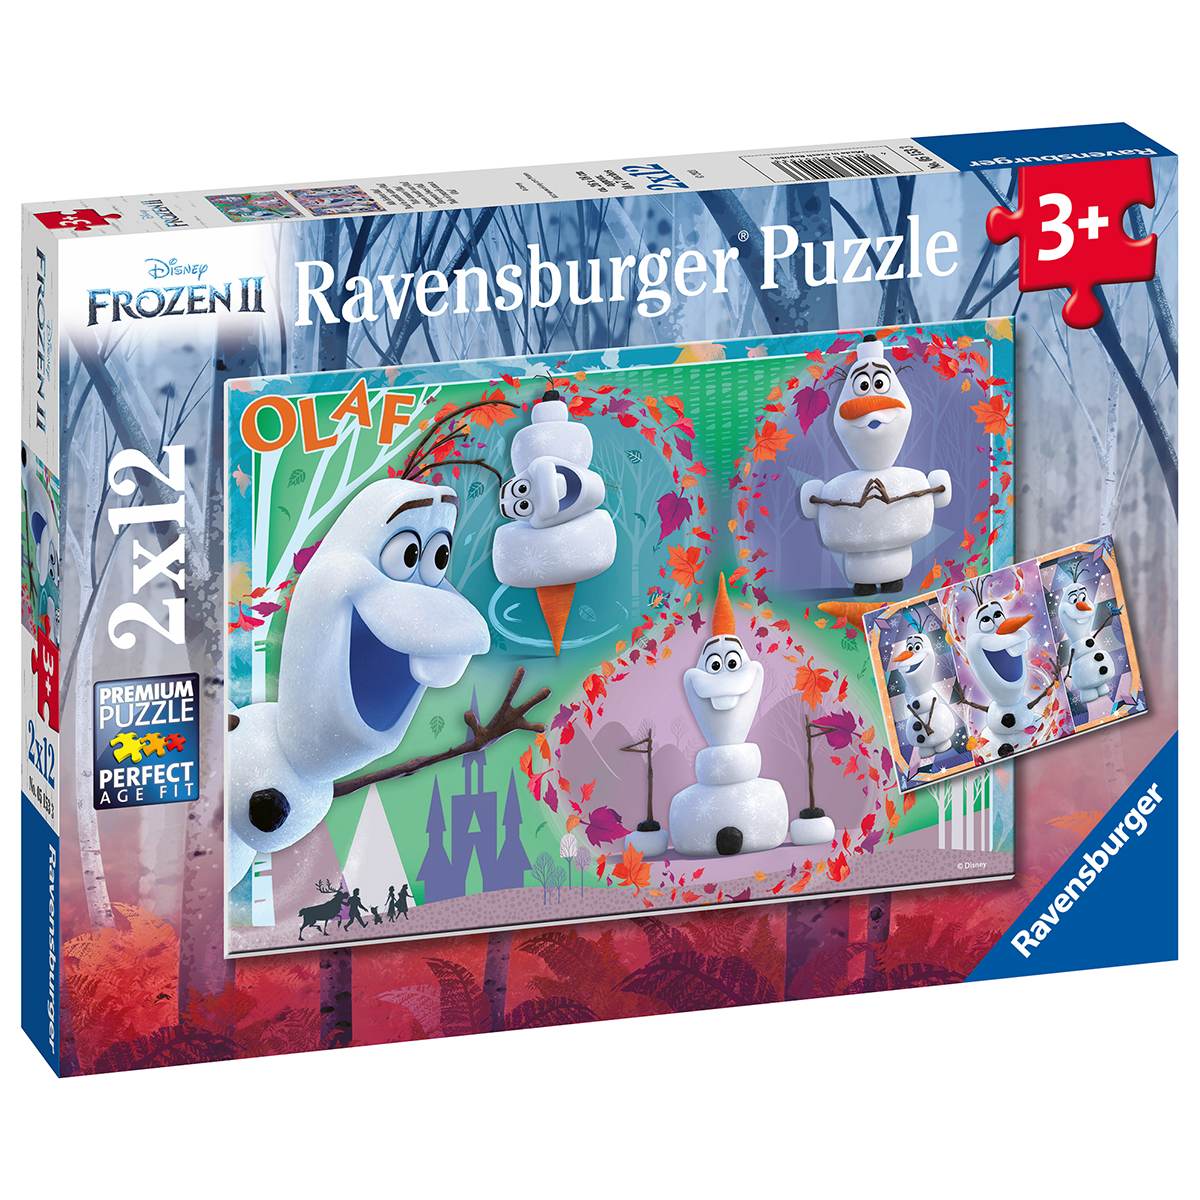 Frozen 4 puzzle in 1 - Puzzle per bambini - Ravensburger